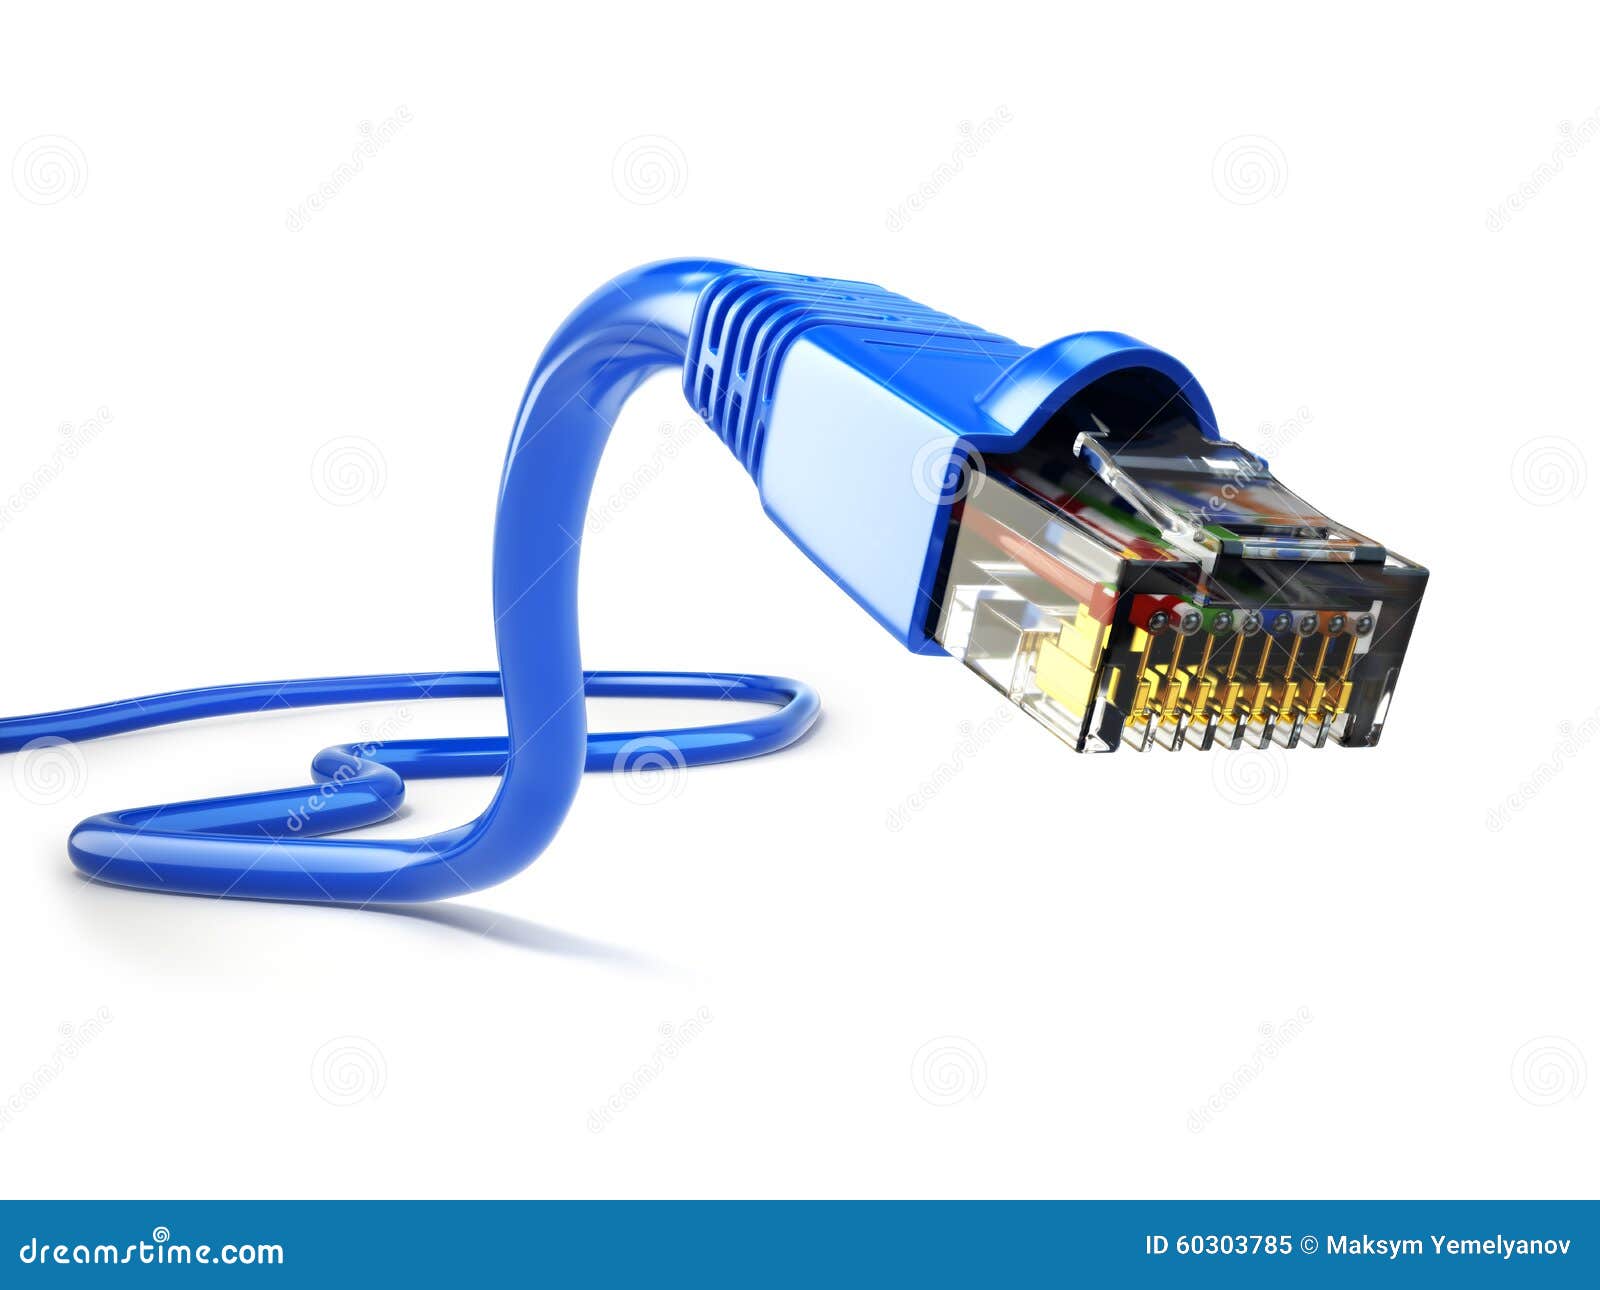 lan network connection ethernet rj45 cable.